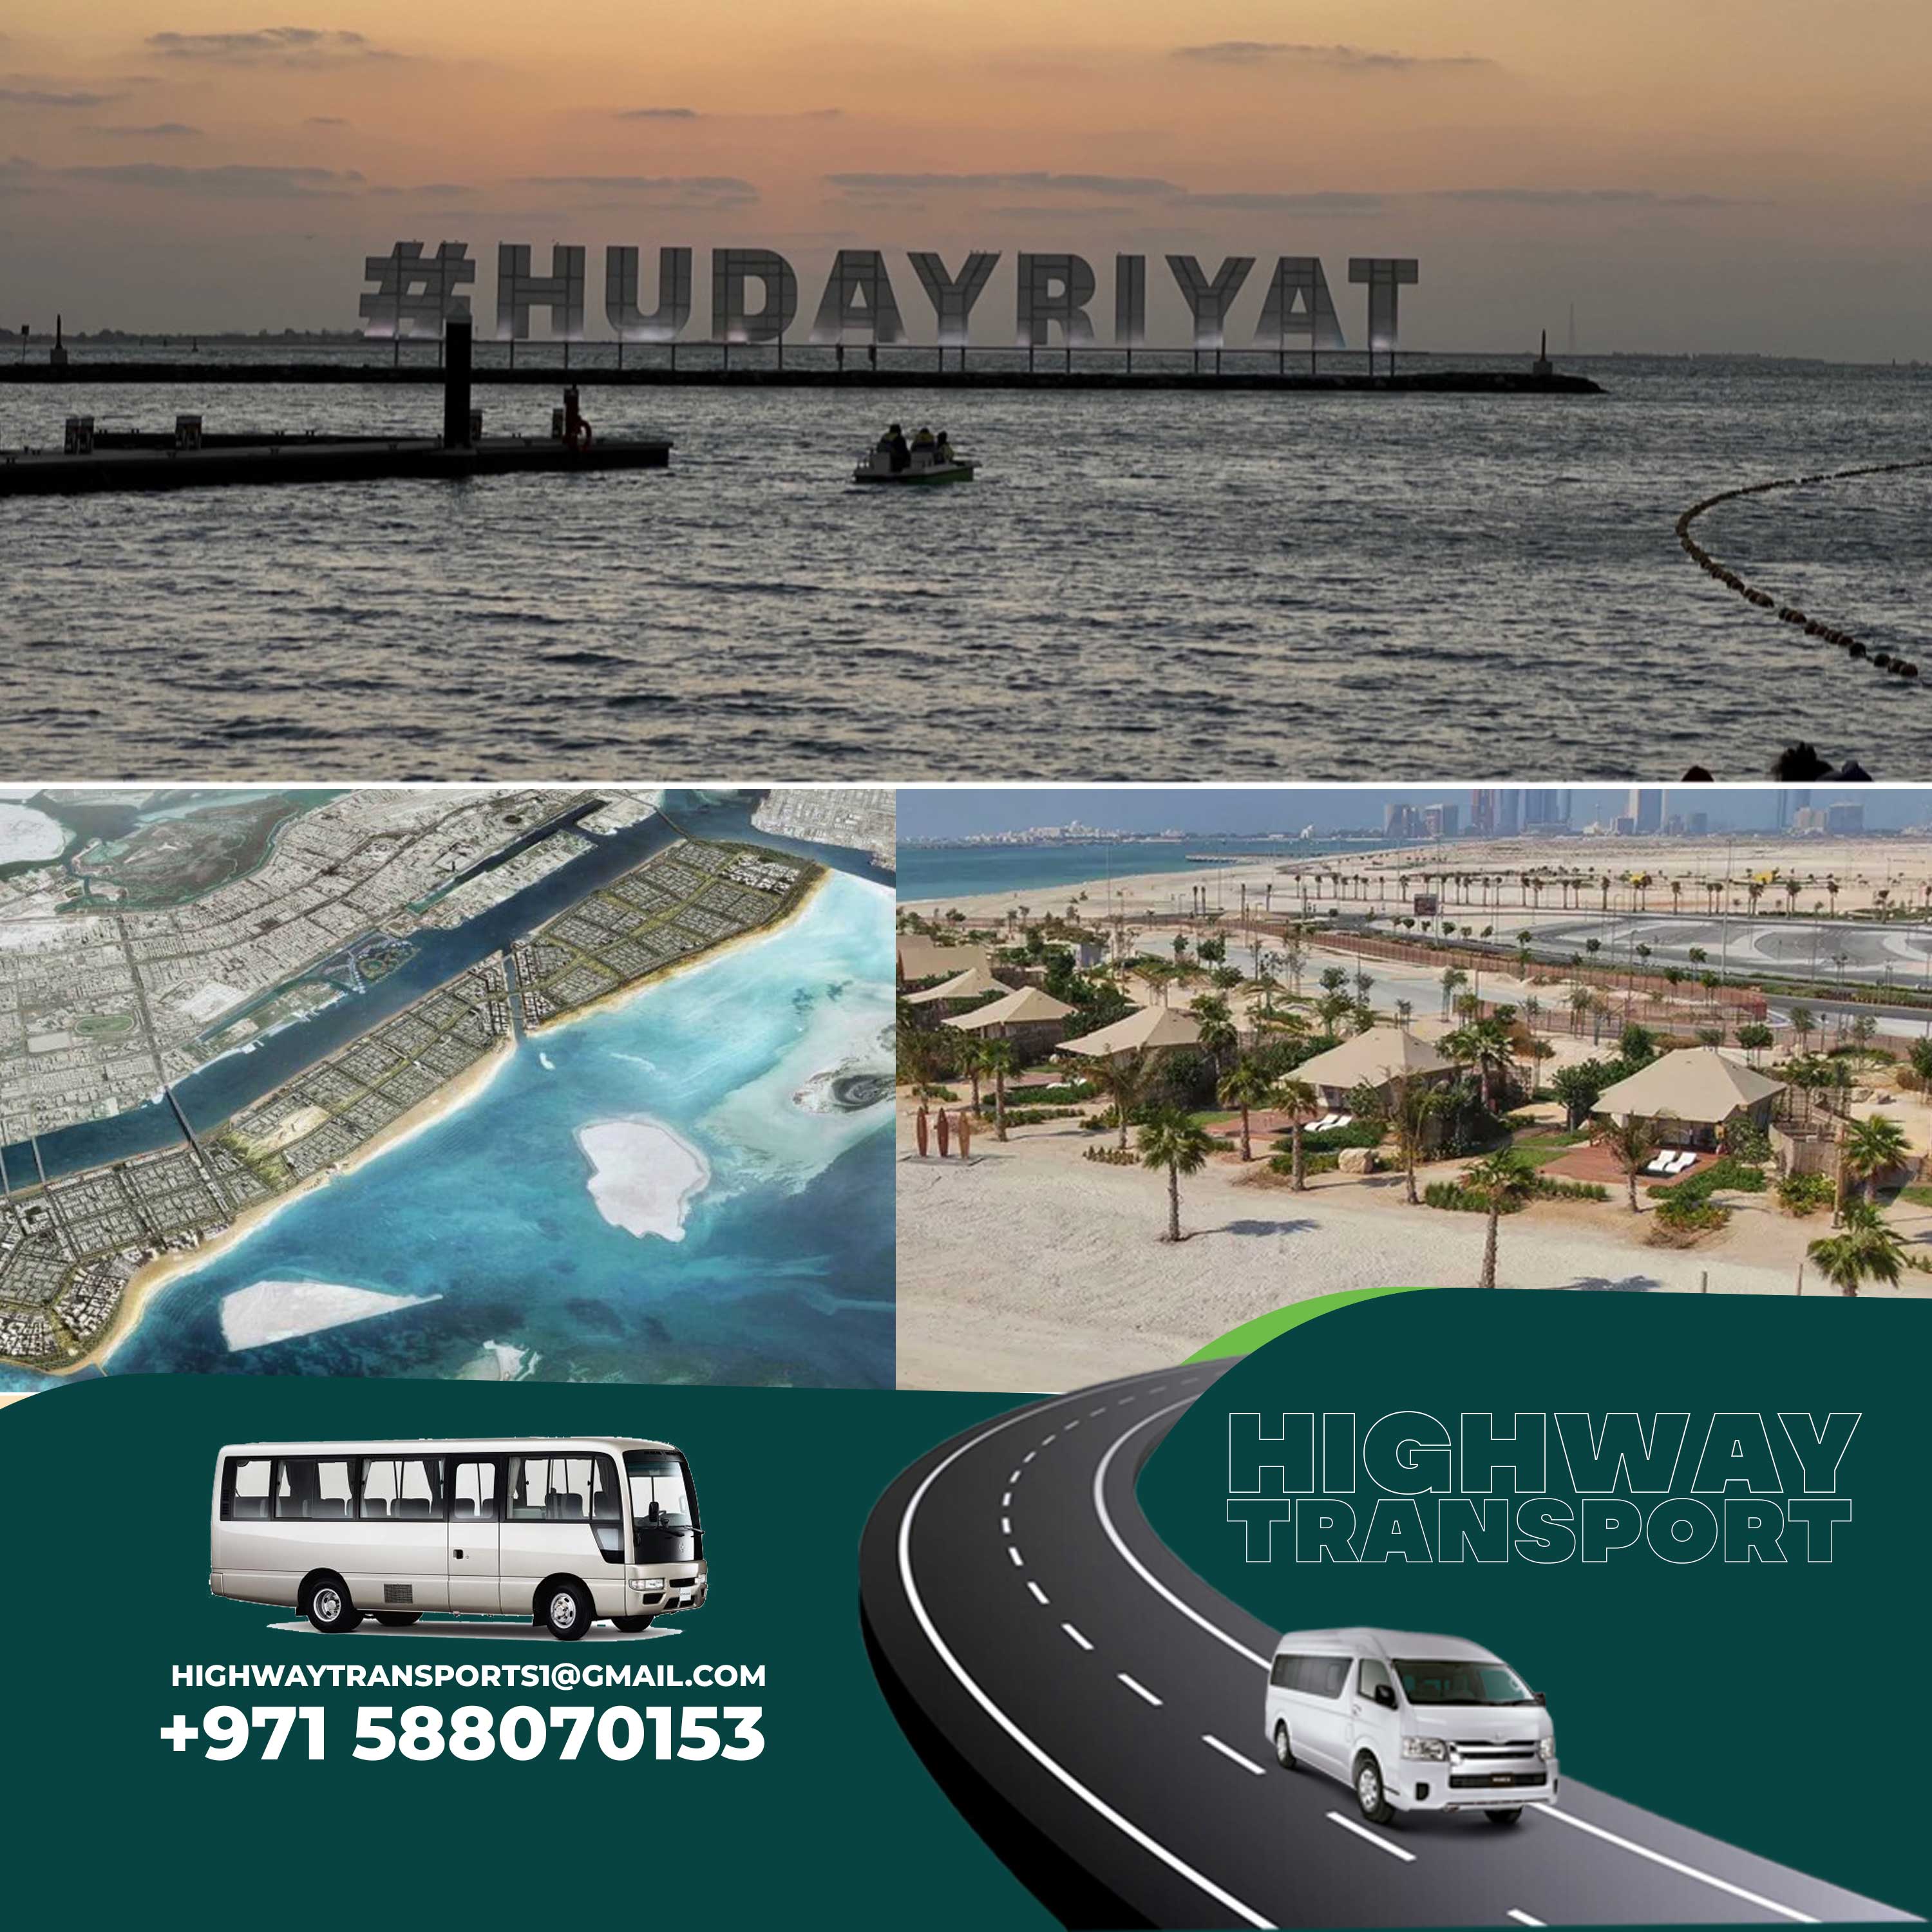 Scenic view of Al Hudayriat Island showcasing beautiful beaches, sports facilities, bike tracks, and dining options